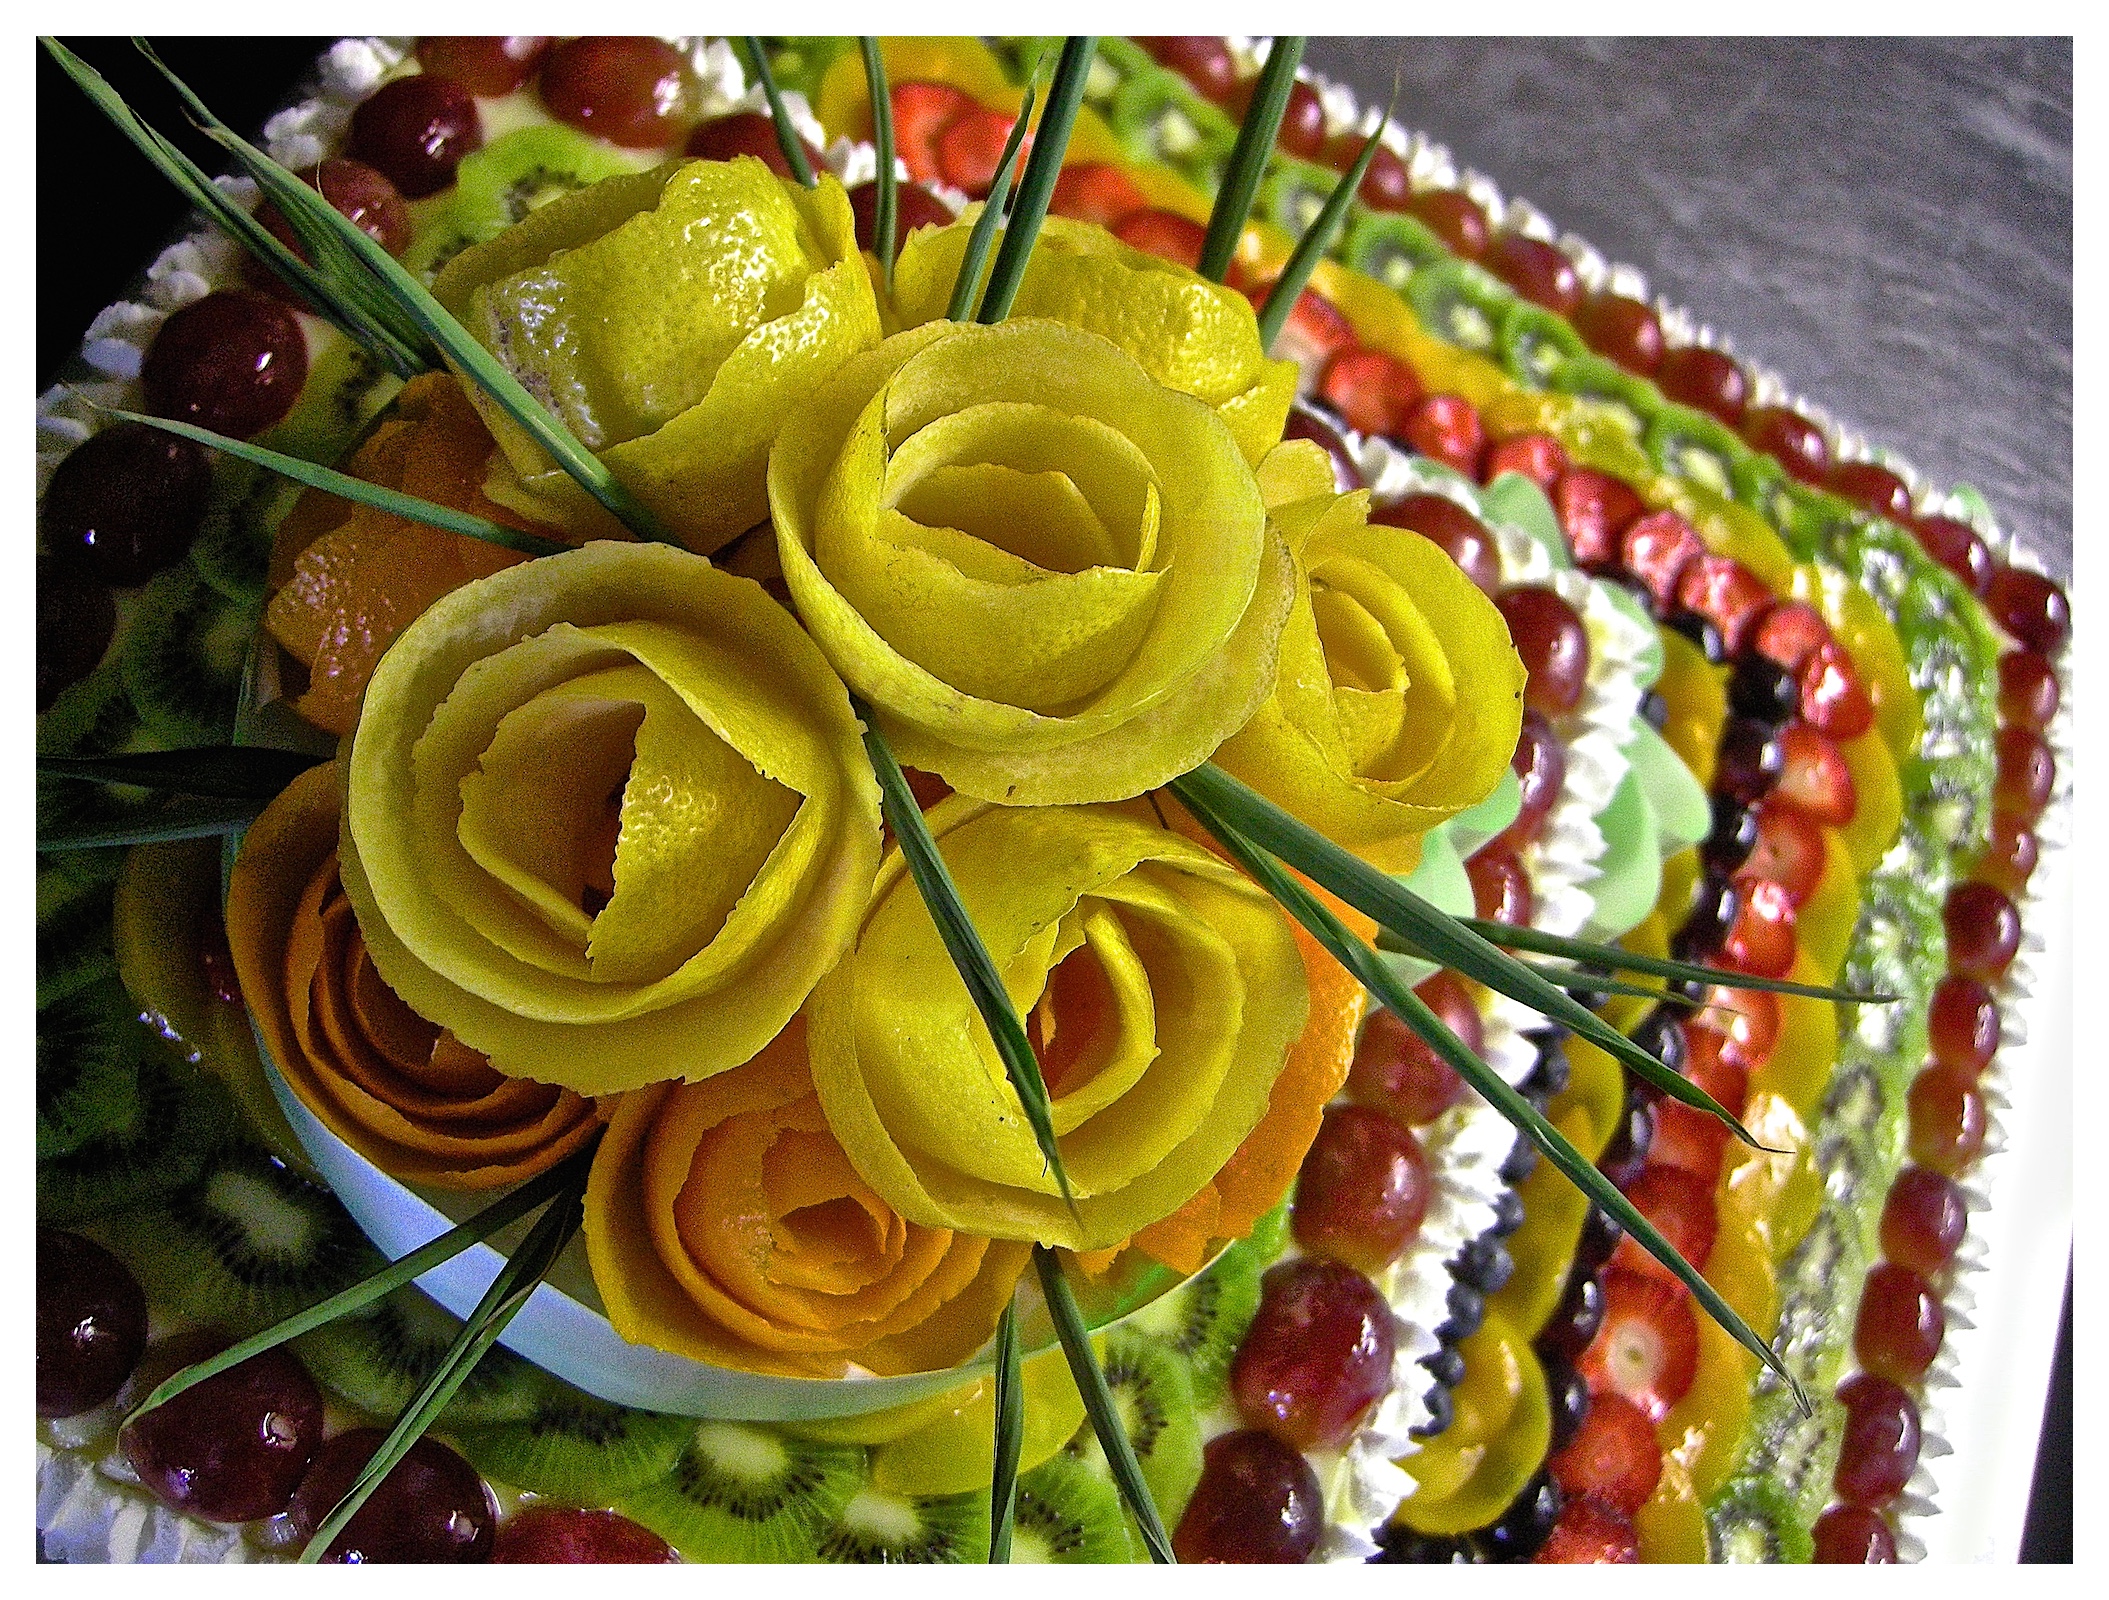 Wedding cake: " In love fruit "